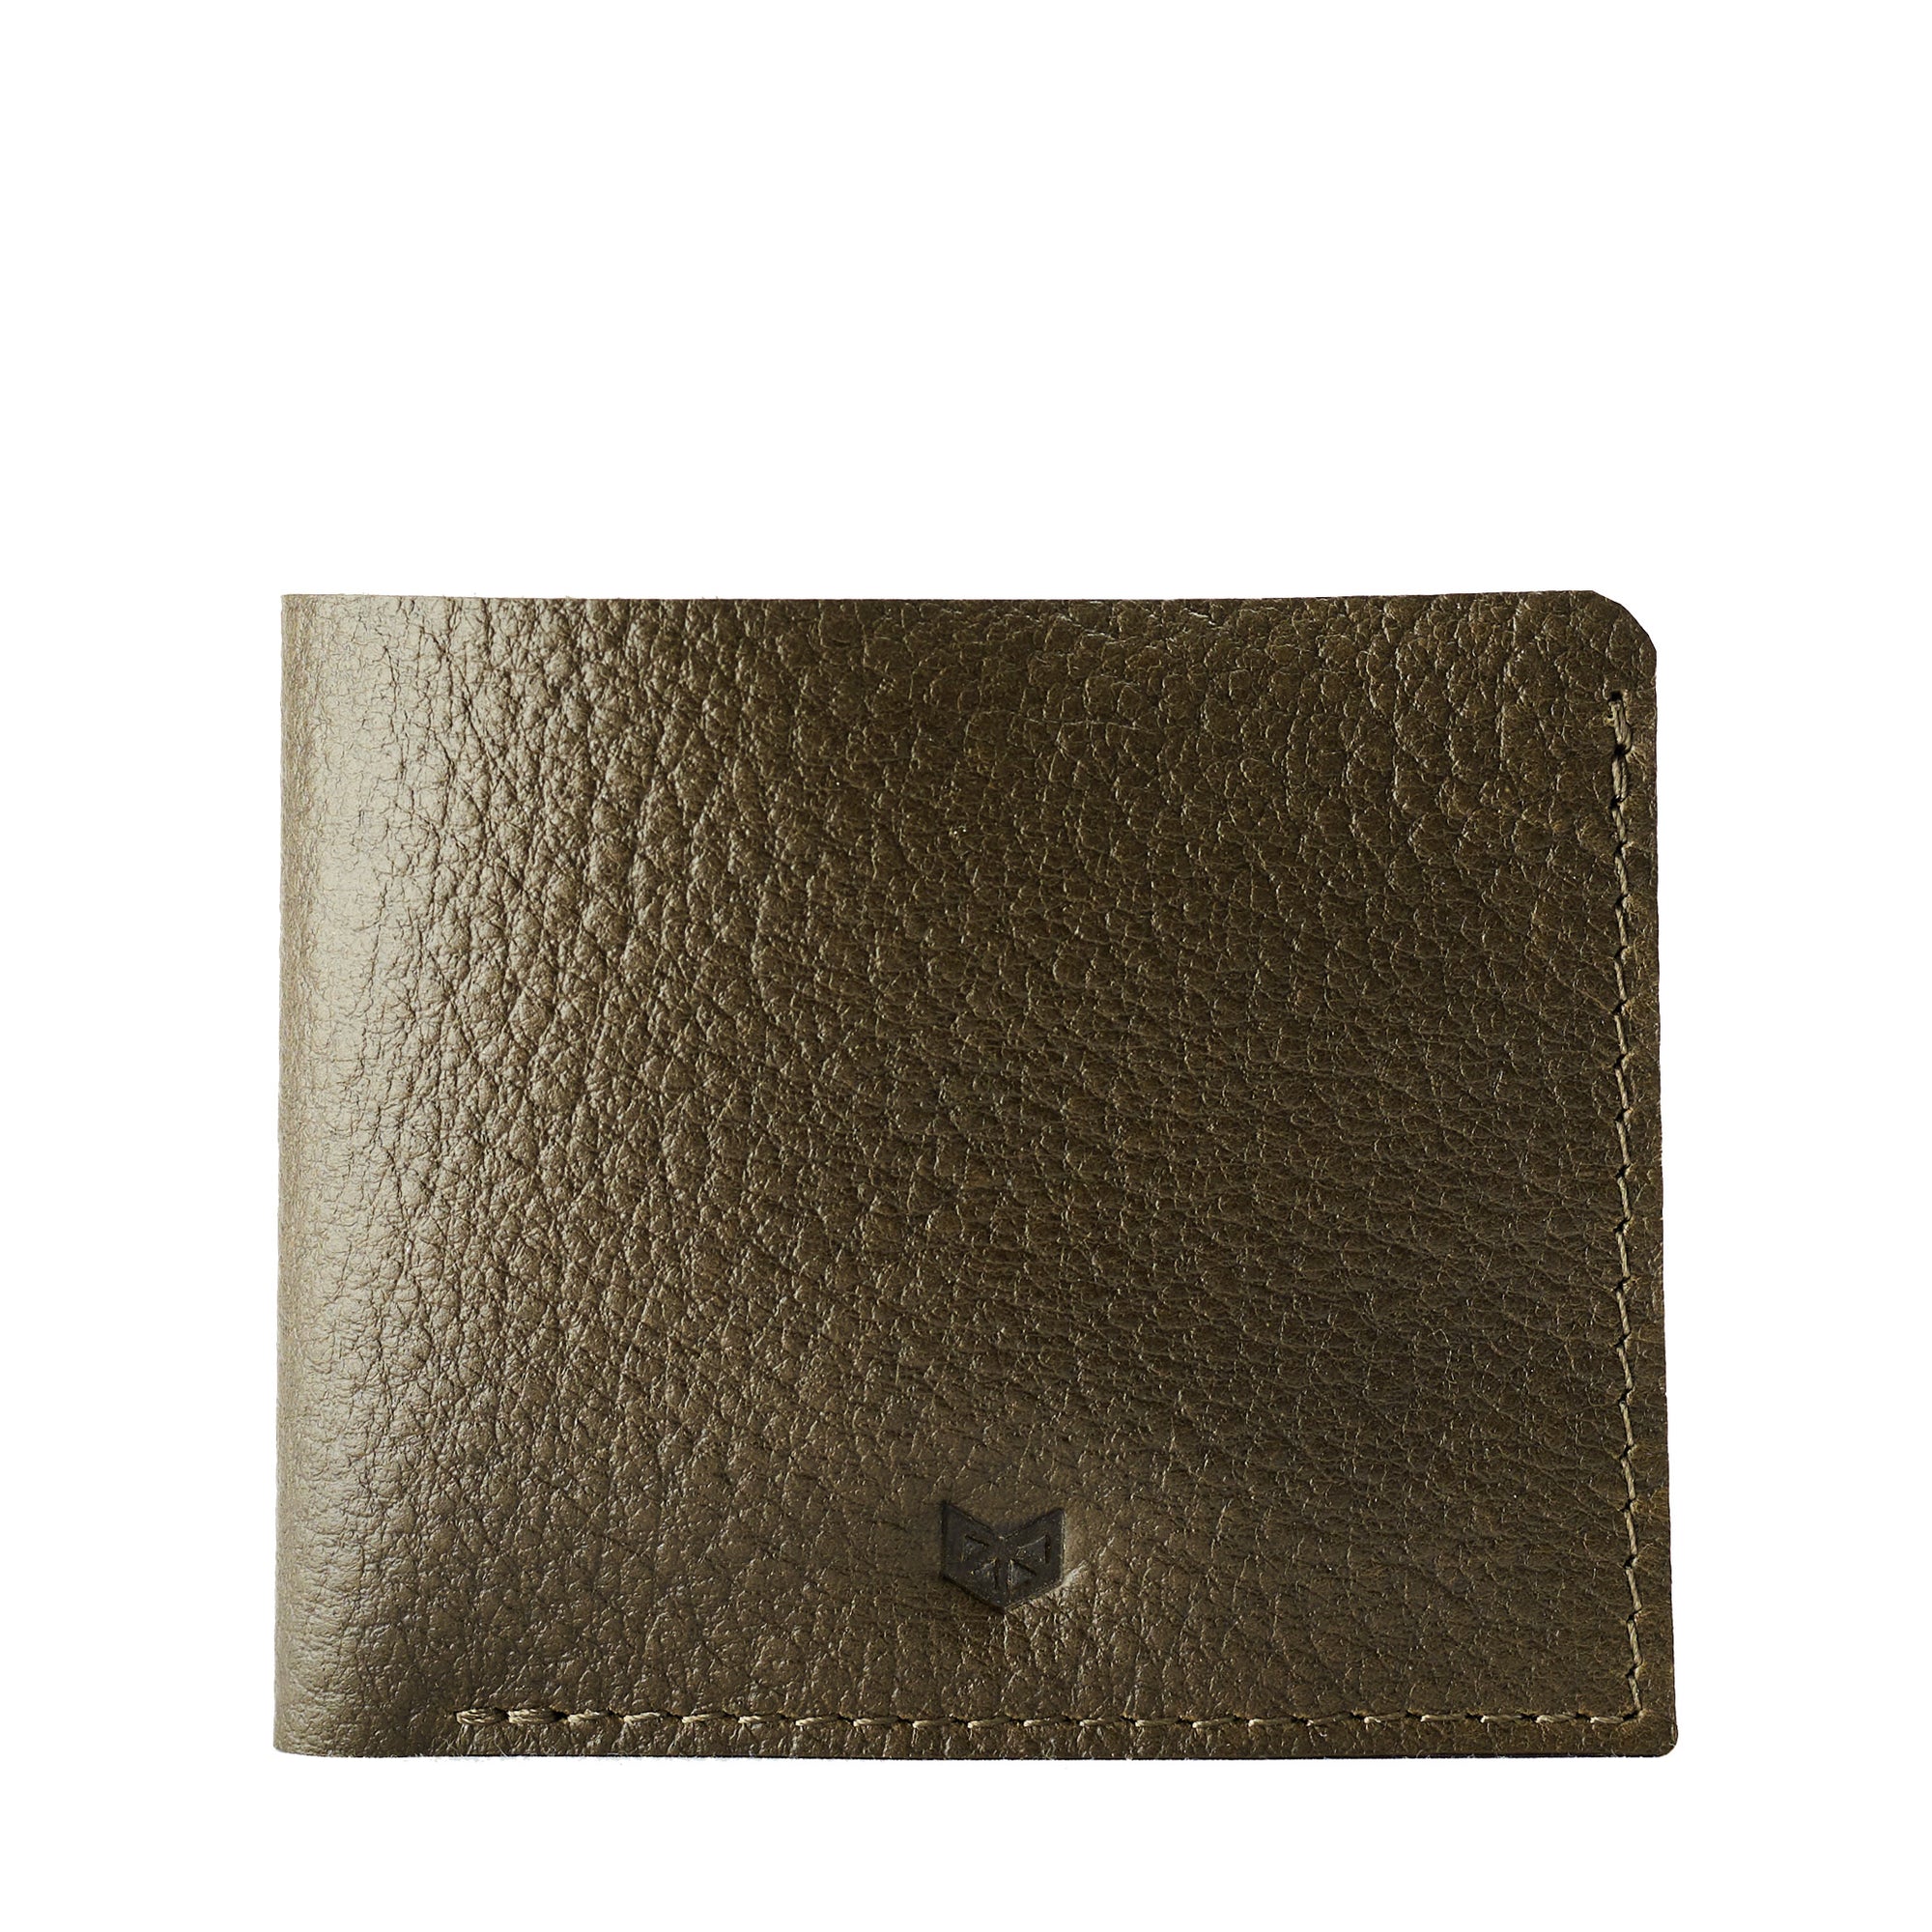 Leather dark green slim wallet, minimalist bifold for mens gifts